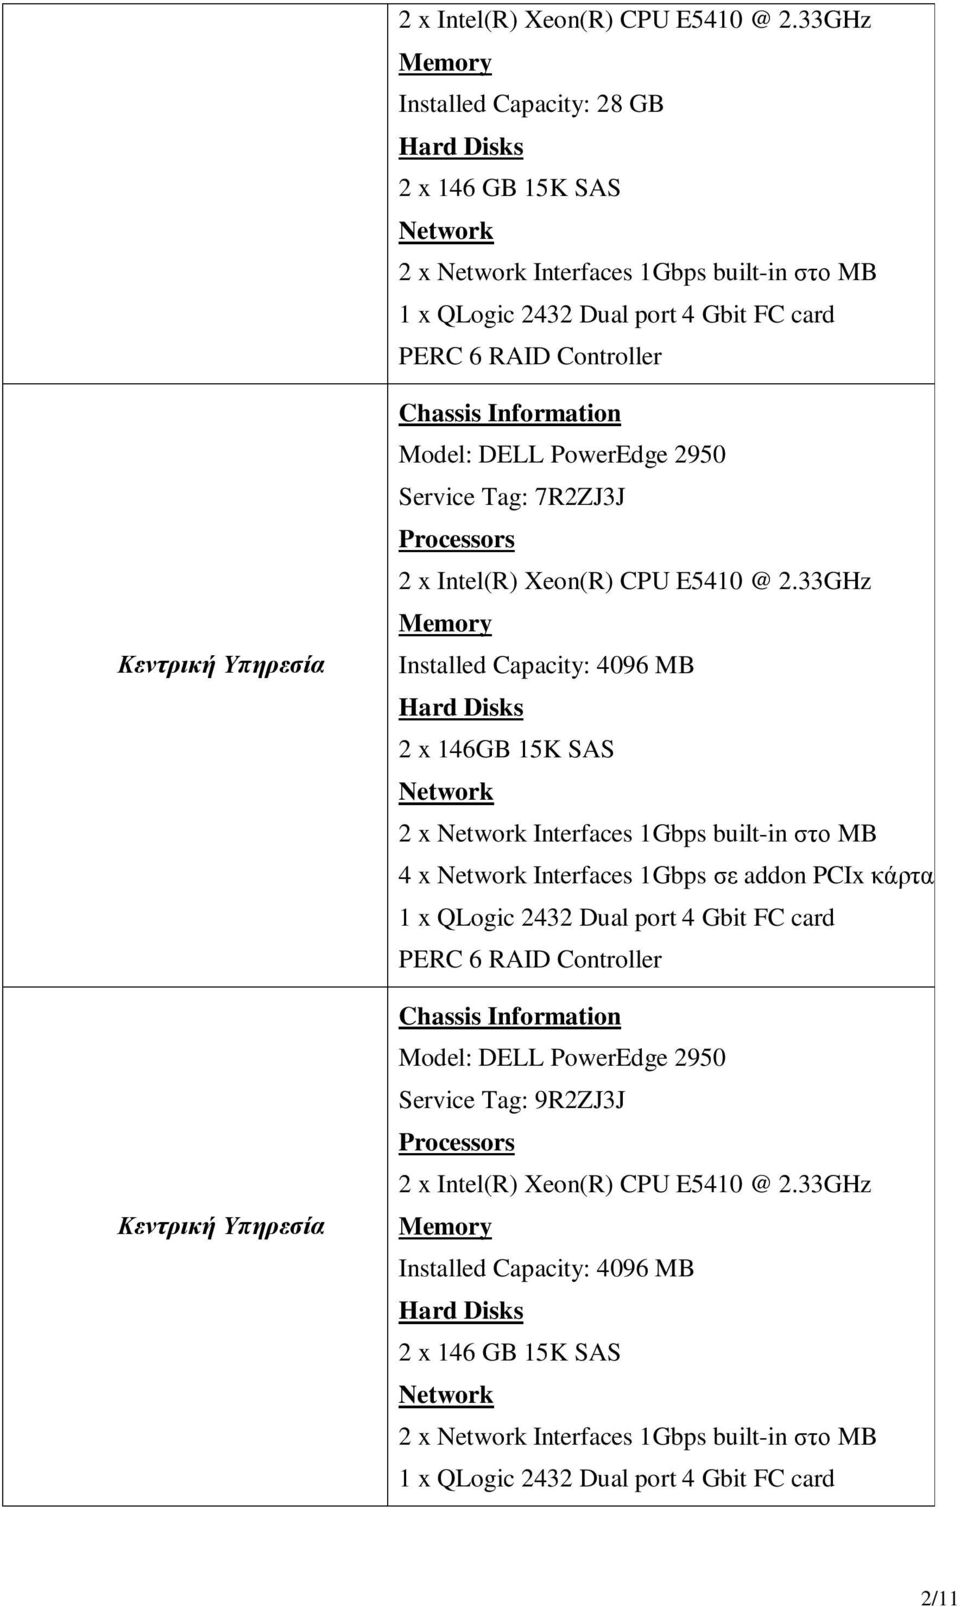 MB 4 x Interfaces 1Gbps σε addon PCIx κάρτα 1 x QLogic 2432 Dual port 4 Gbit FC card Model: DELL PowerEdge 2950 Service Tag: